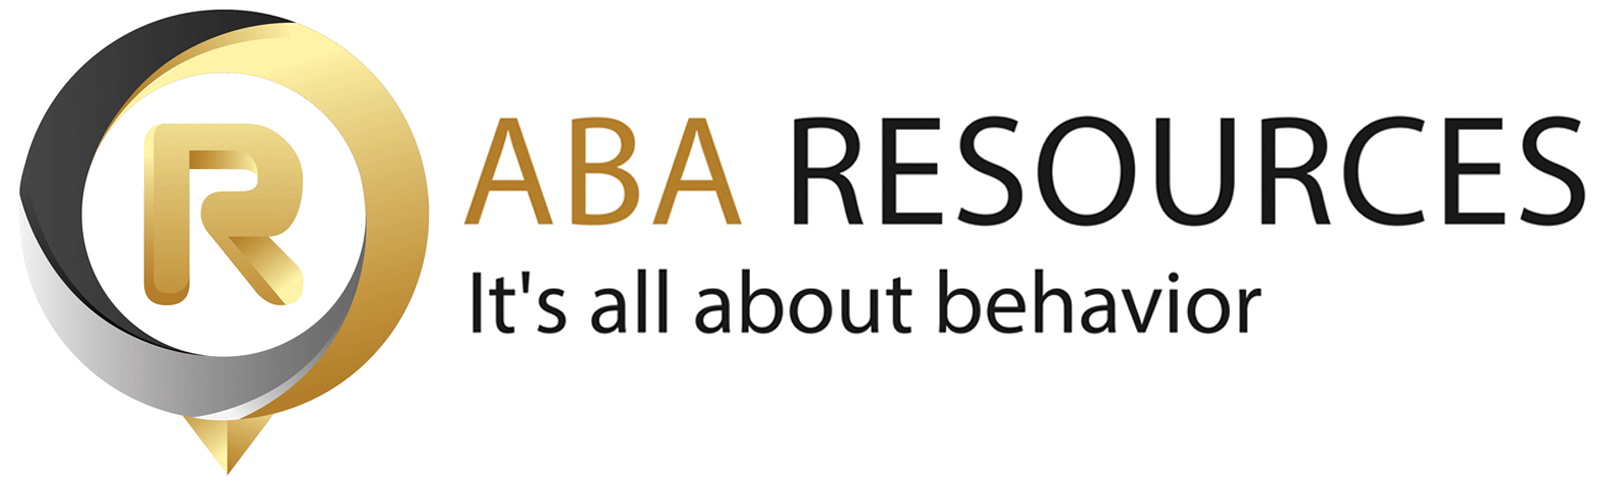 Aba Resources